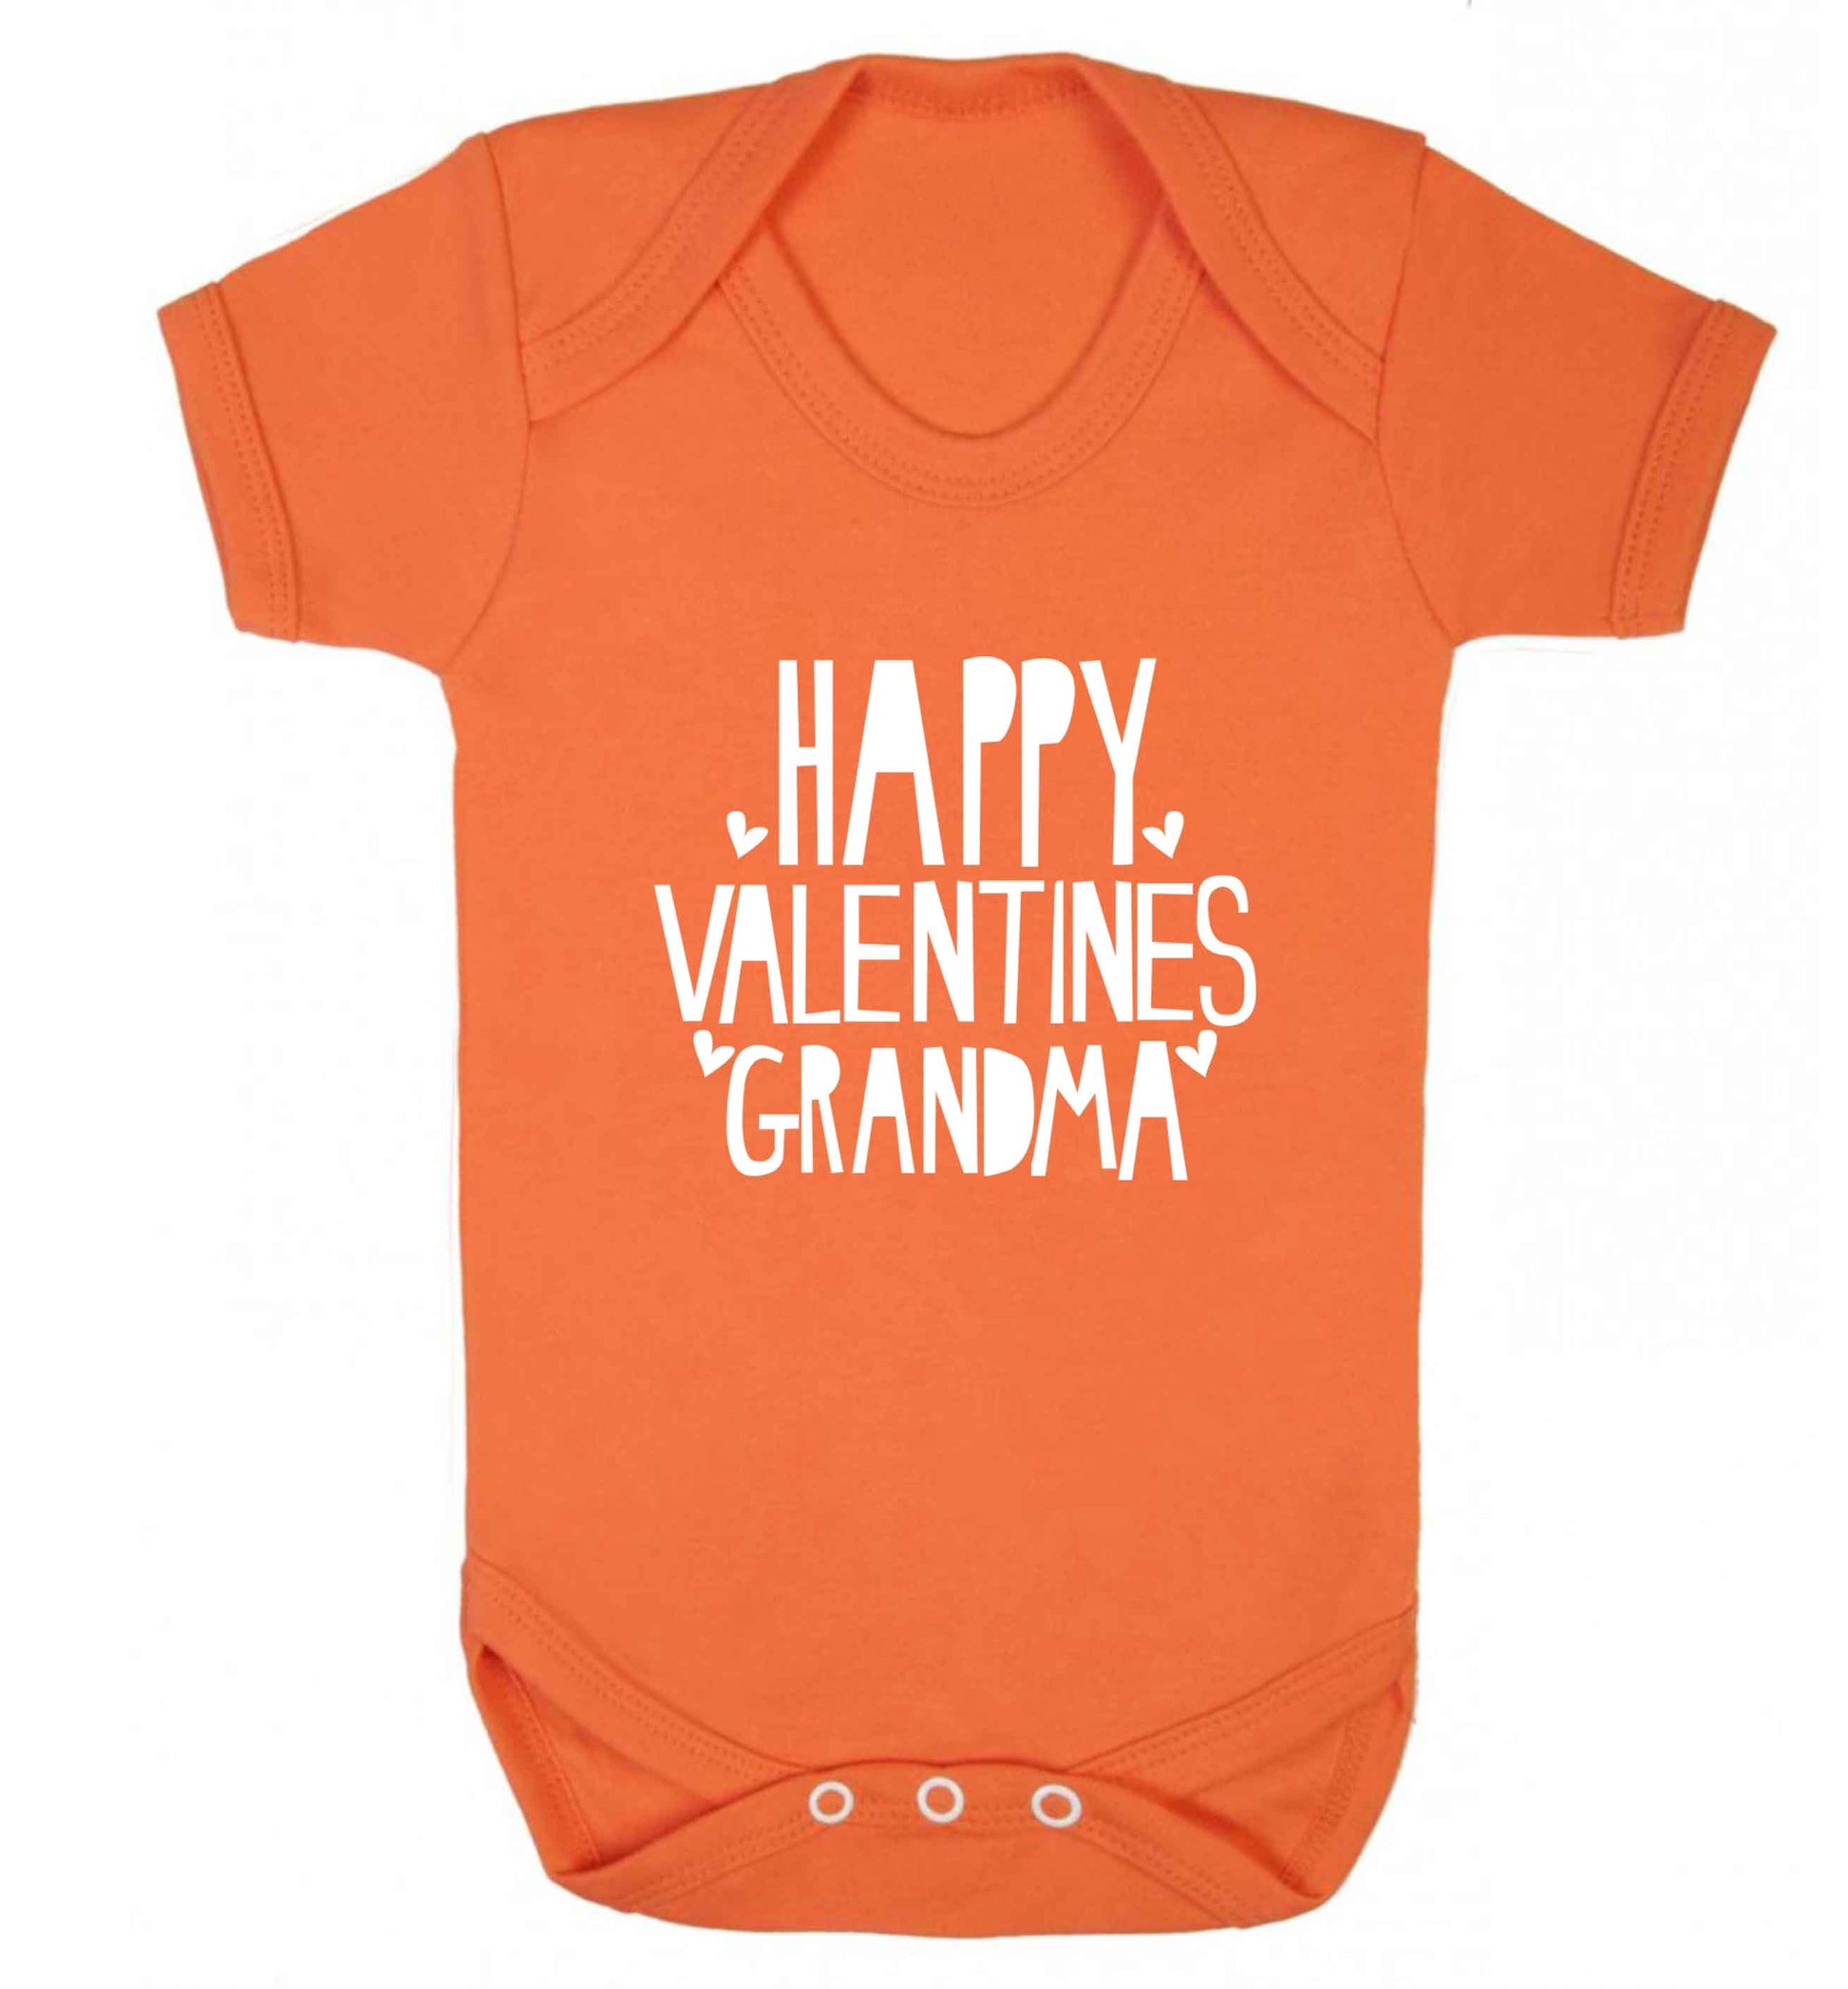 Happy valentines grandma baby vest orange 18-24 months